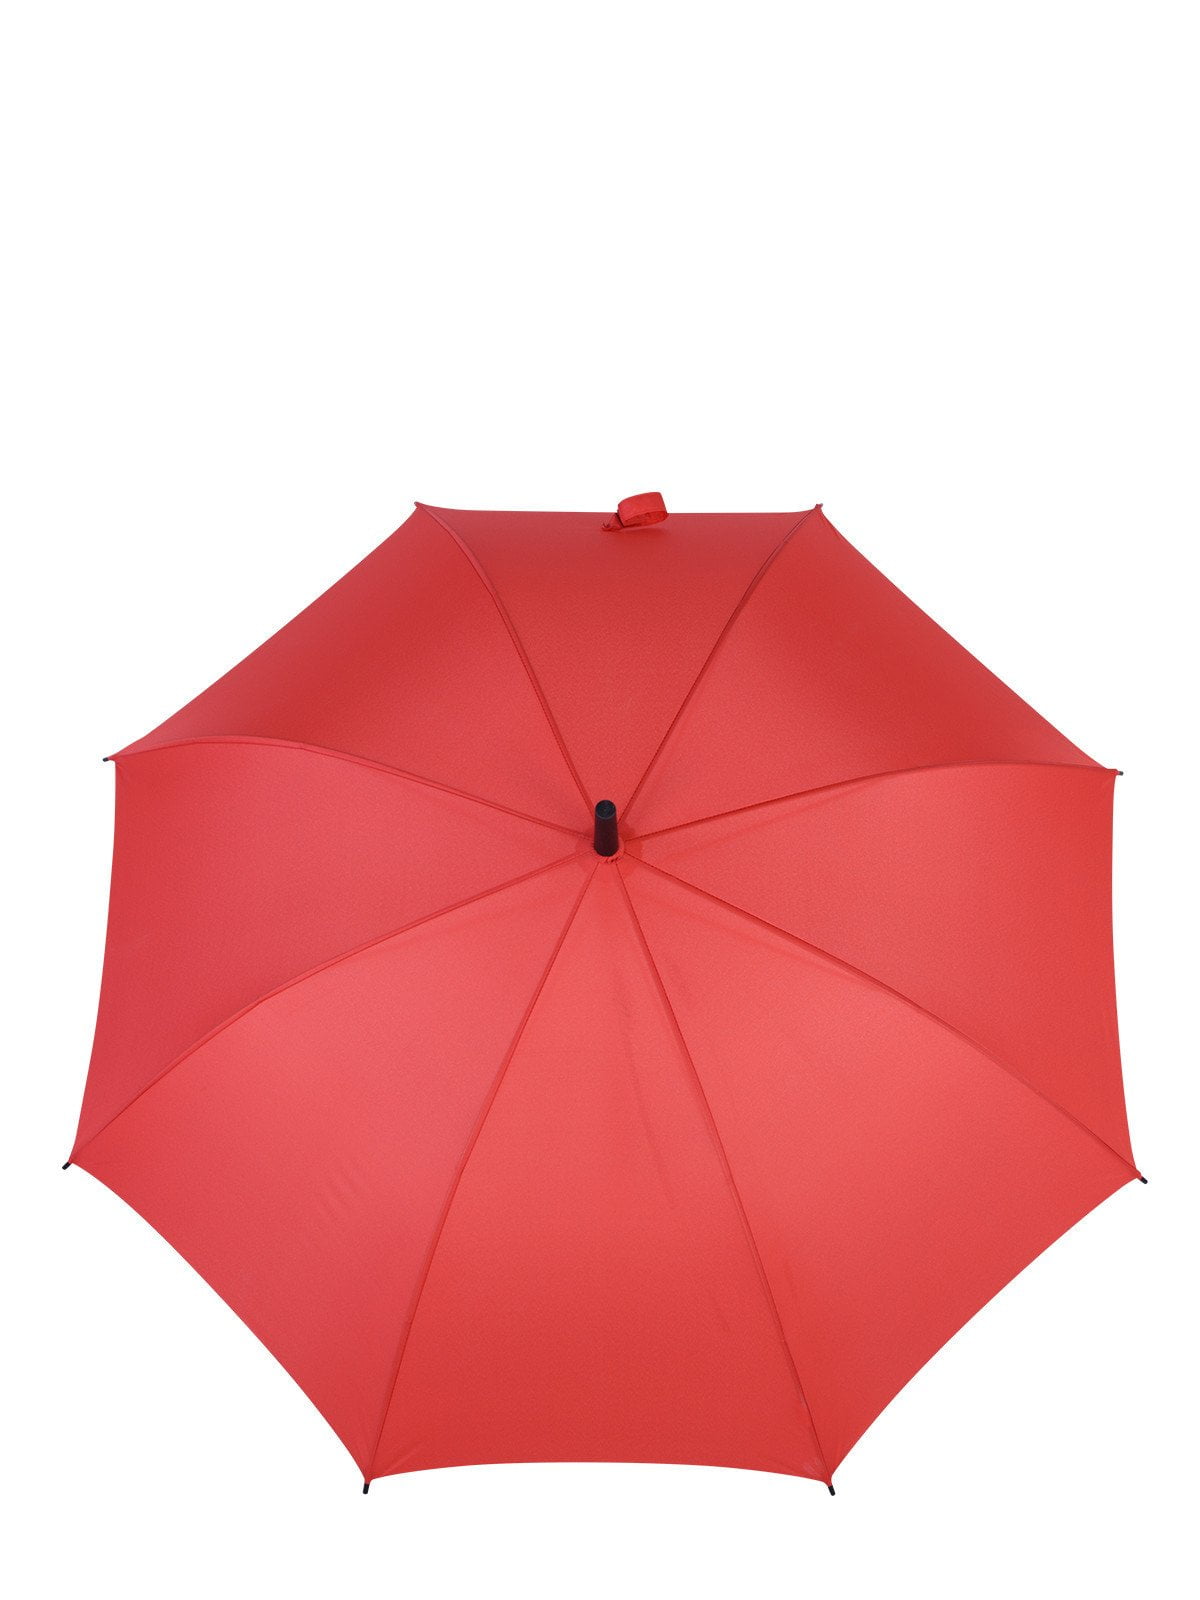 Belami by Knirps Stick Umbrella – Solids Red